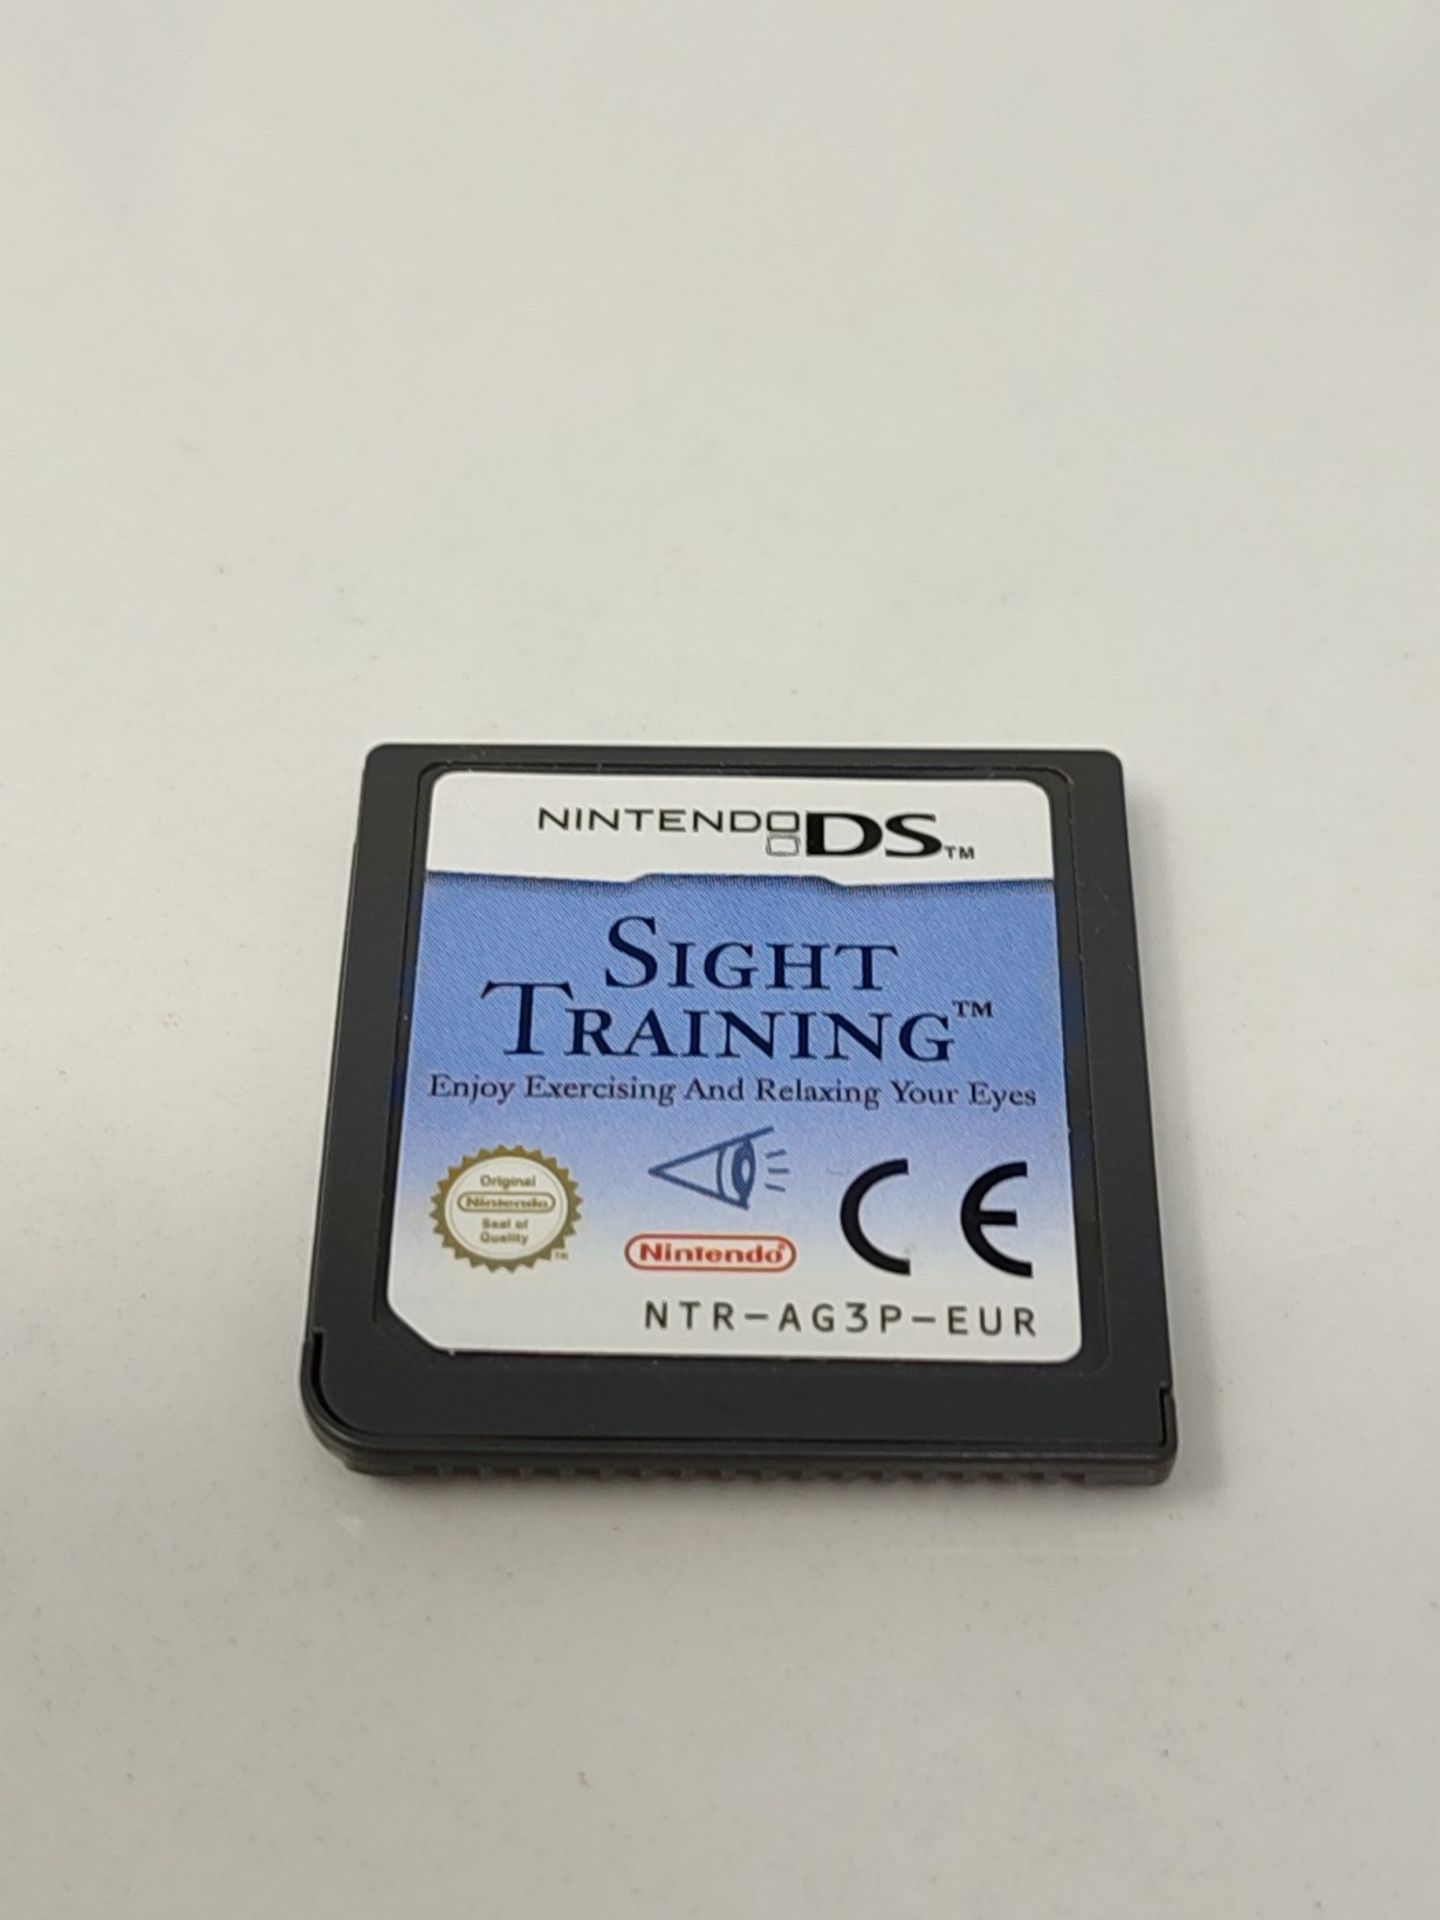 Sight Training Nintendo DS - Image 2 of 2